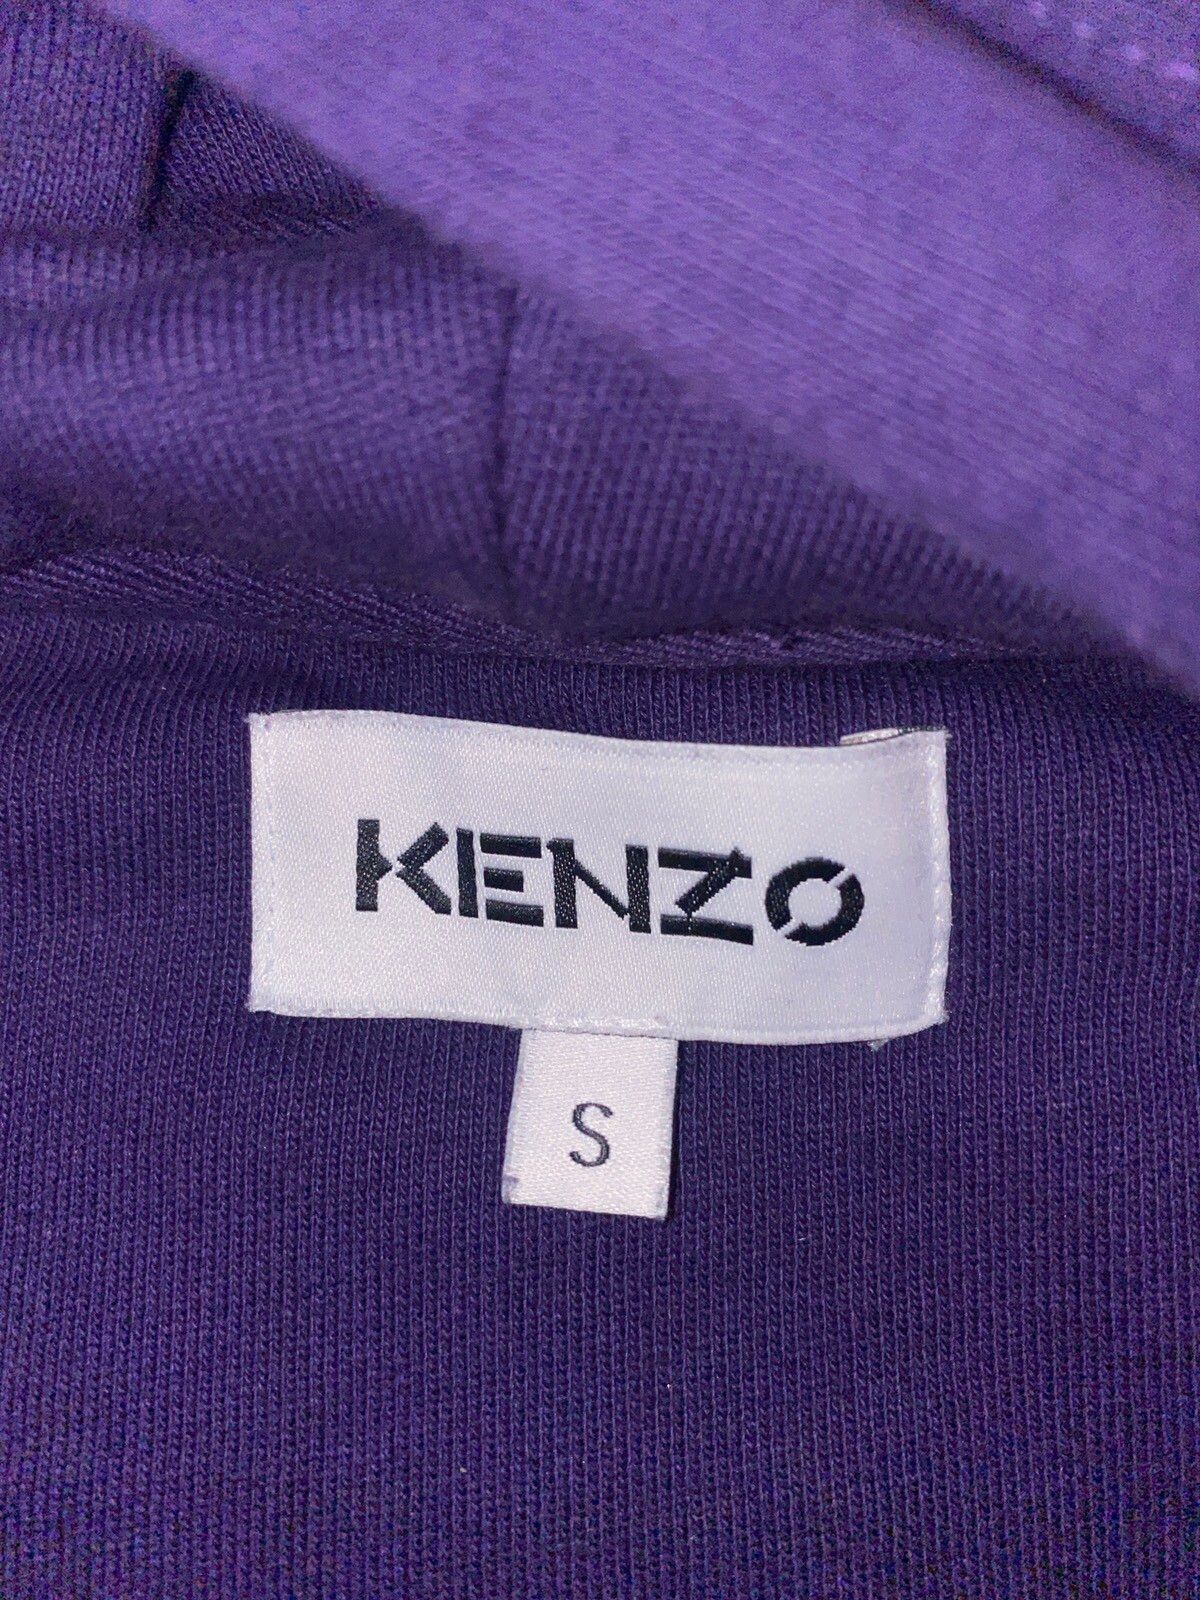 Kenzo KENZO Tiger Original Hoodie Sweatshirt Size US S / EU 44-46 / 1 - 3 Thumbnail